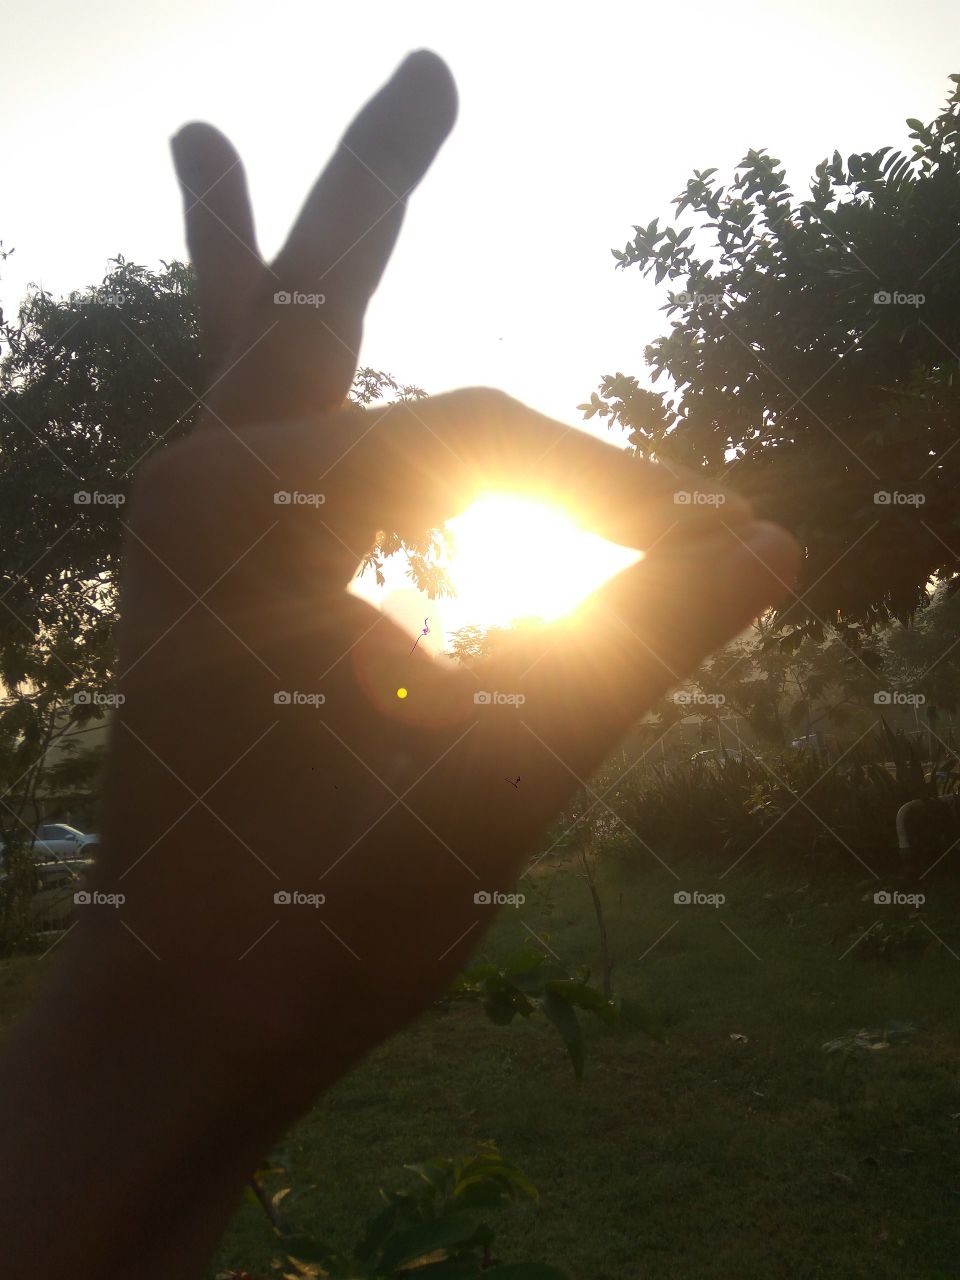 sun
sky
tree
hand